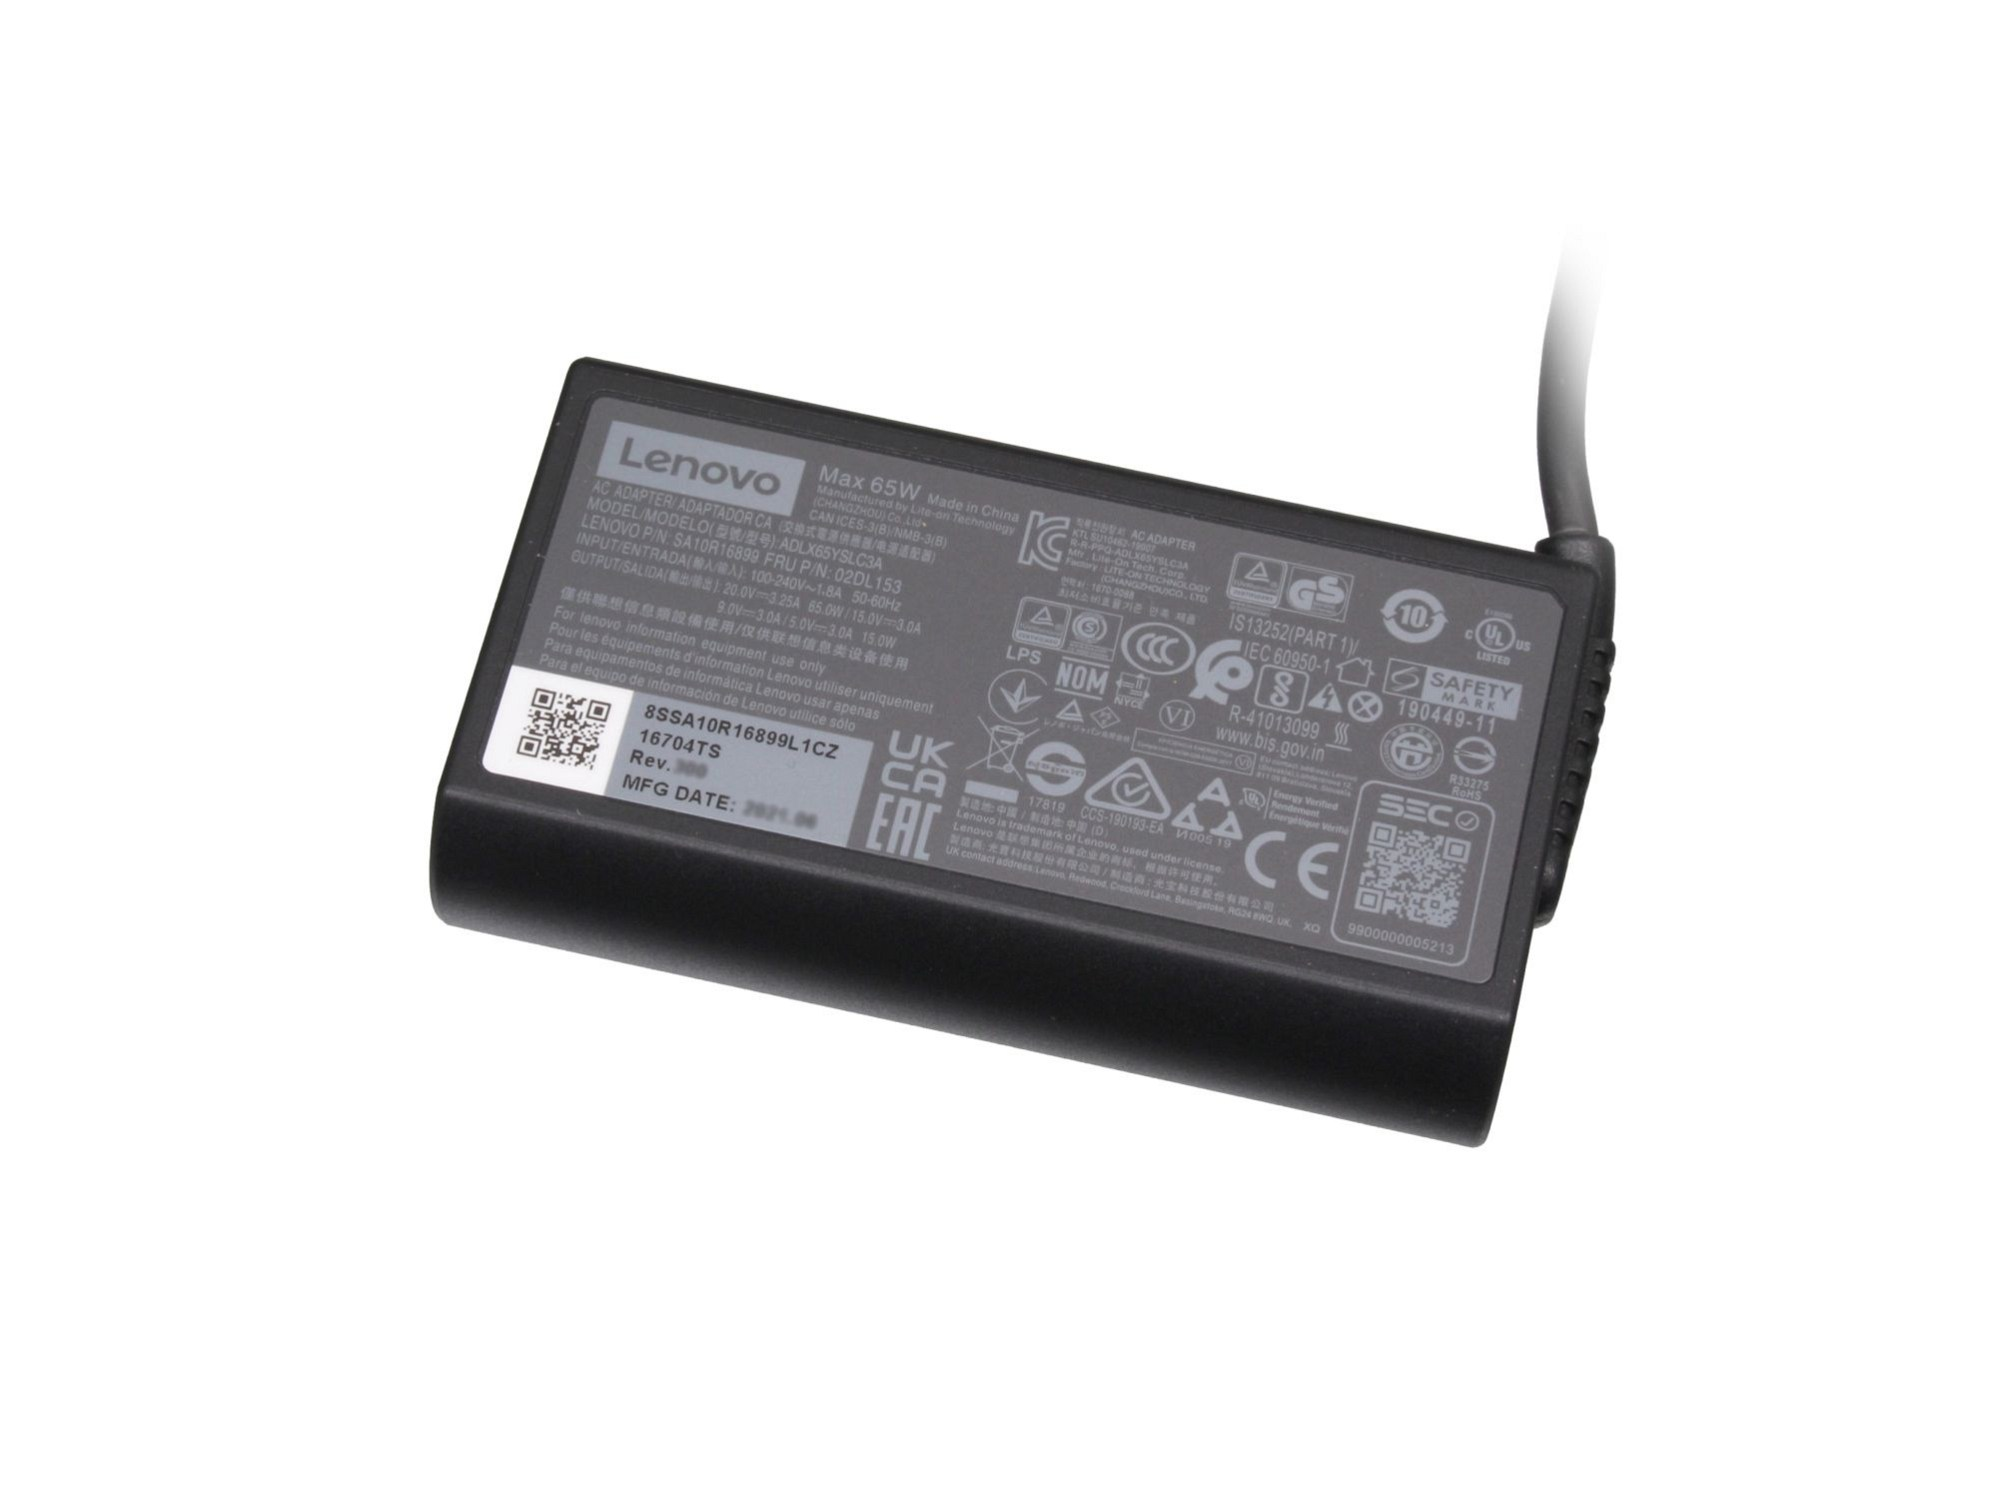 USB-C 02DL151 LENOVO 65 Original Netzteil Watt abgerundetes